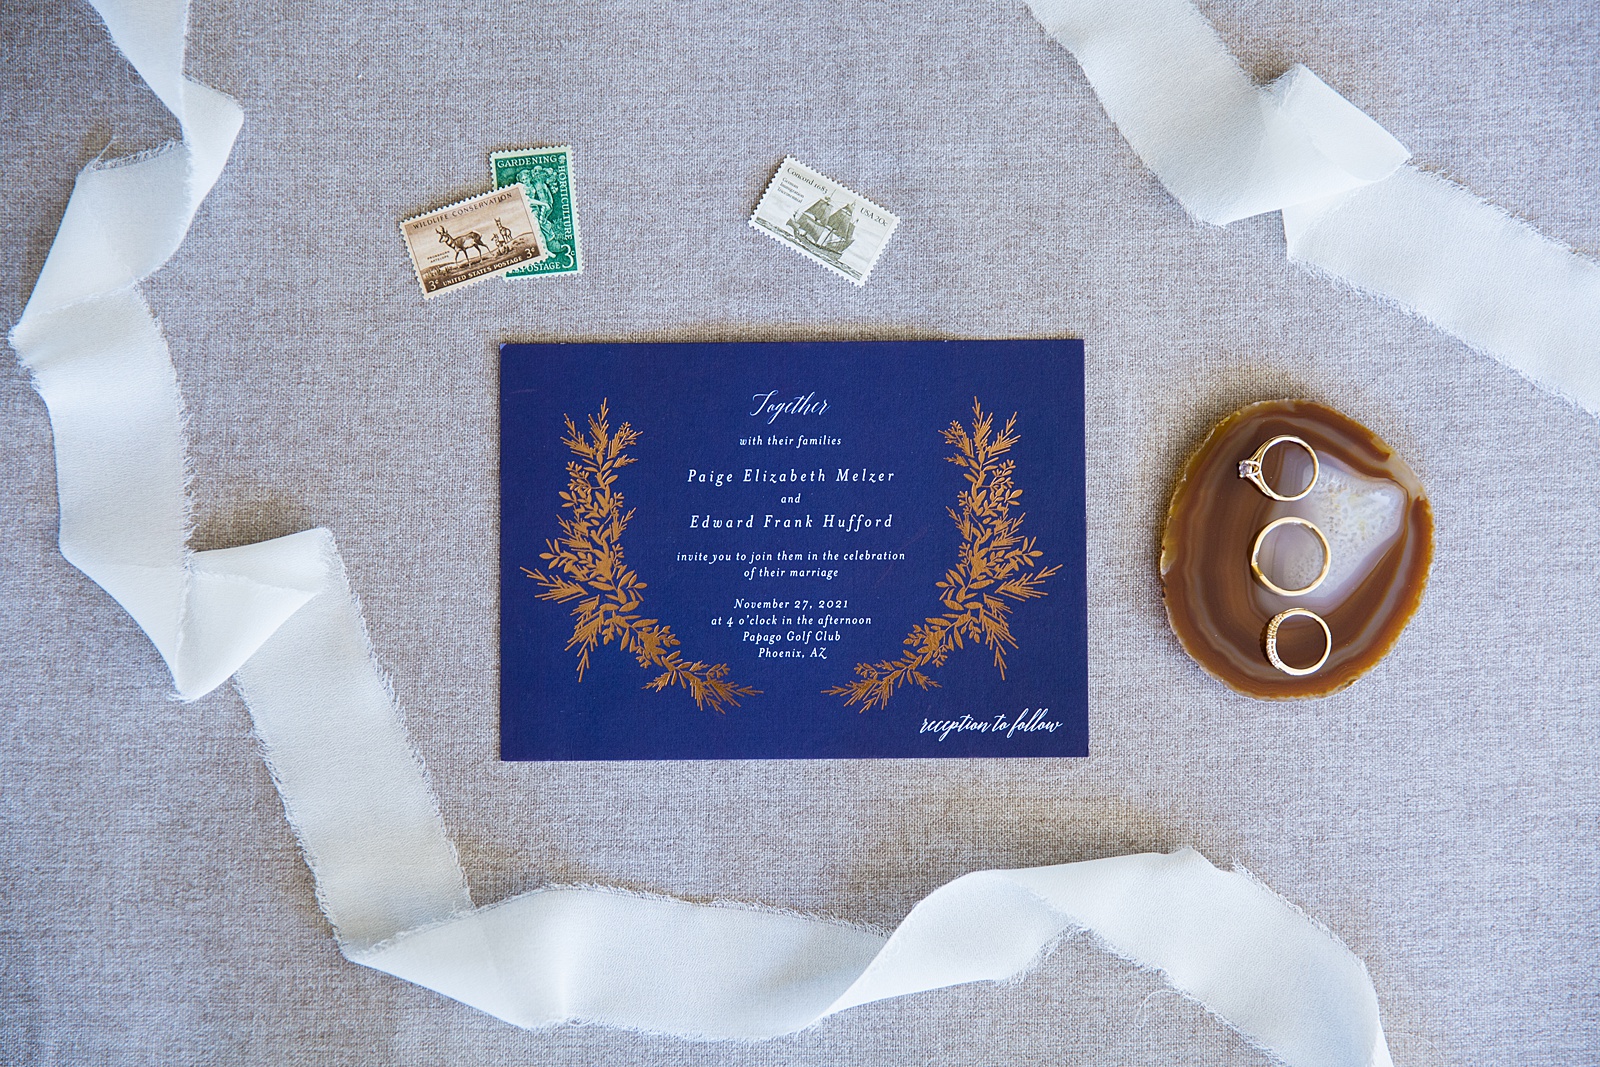 Navy and copper wedding invitations by Phoenix wedding photographer PMA Photography.